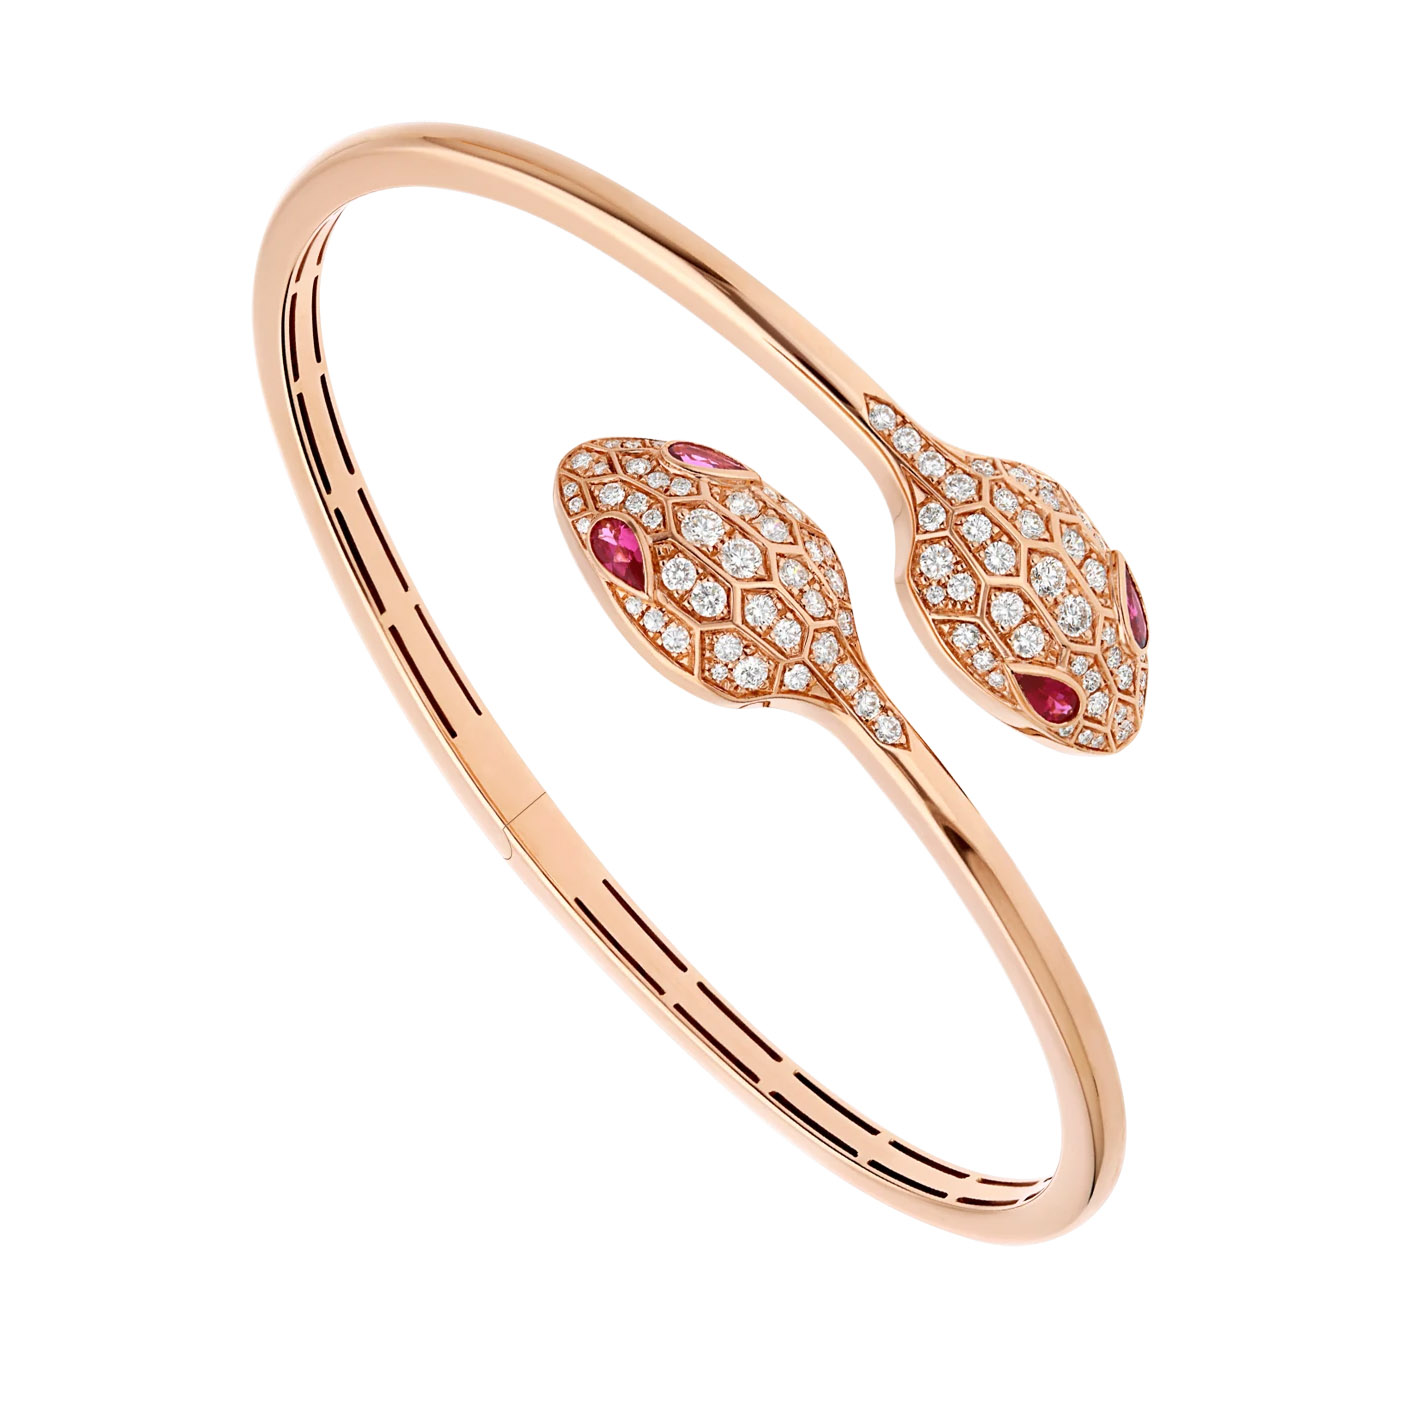 Wholesale Custom design OEM/ODM Jewelry 18K rose gold bracelet set with rubellite eyes and pavé diamonds OEM Jewelry Factory